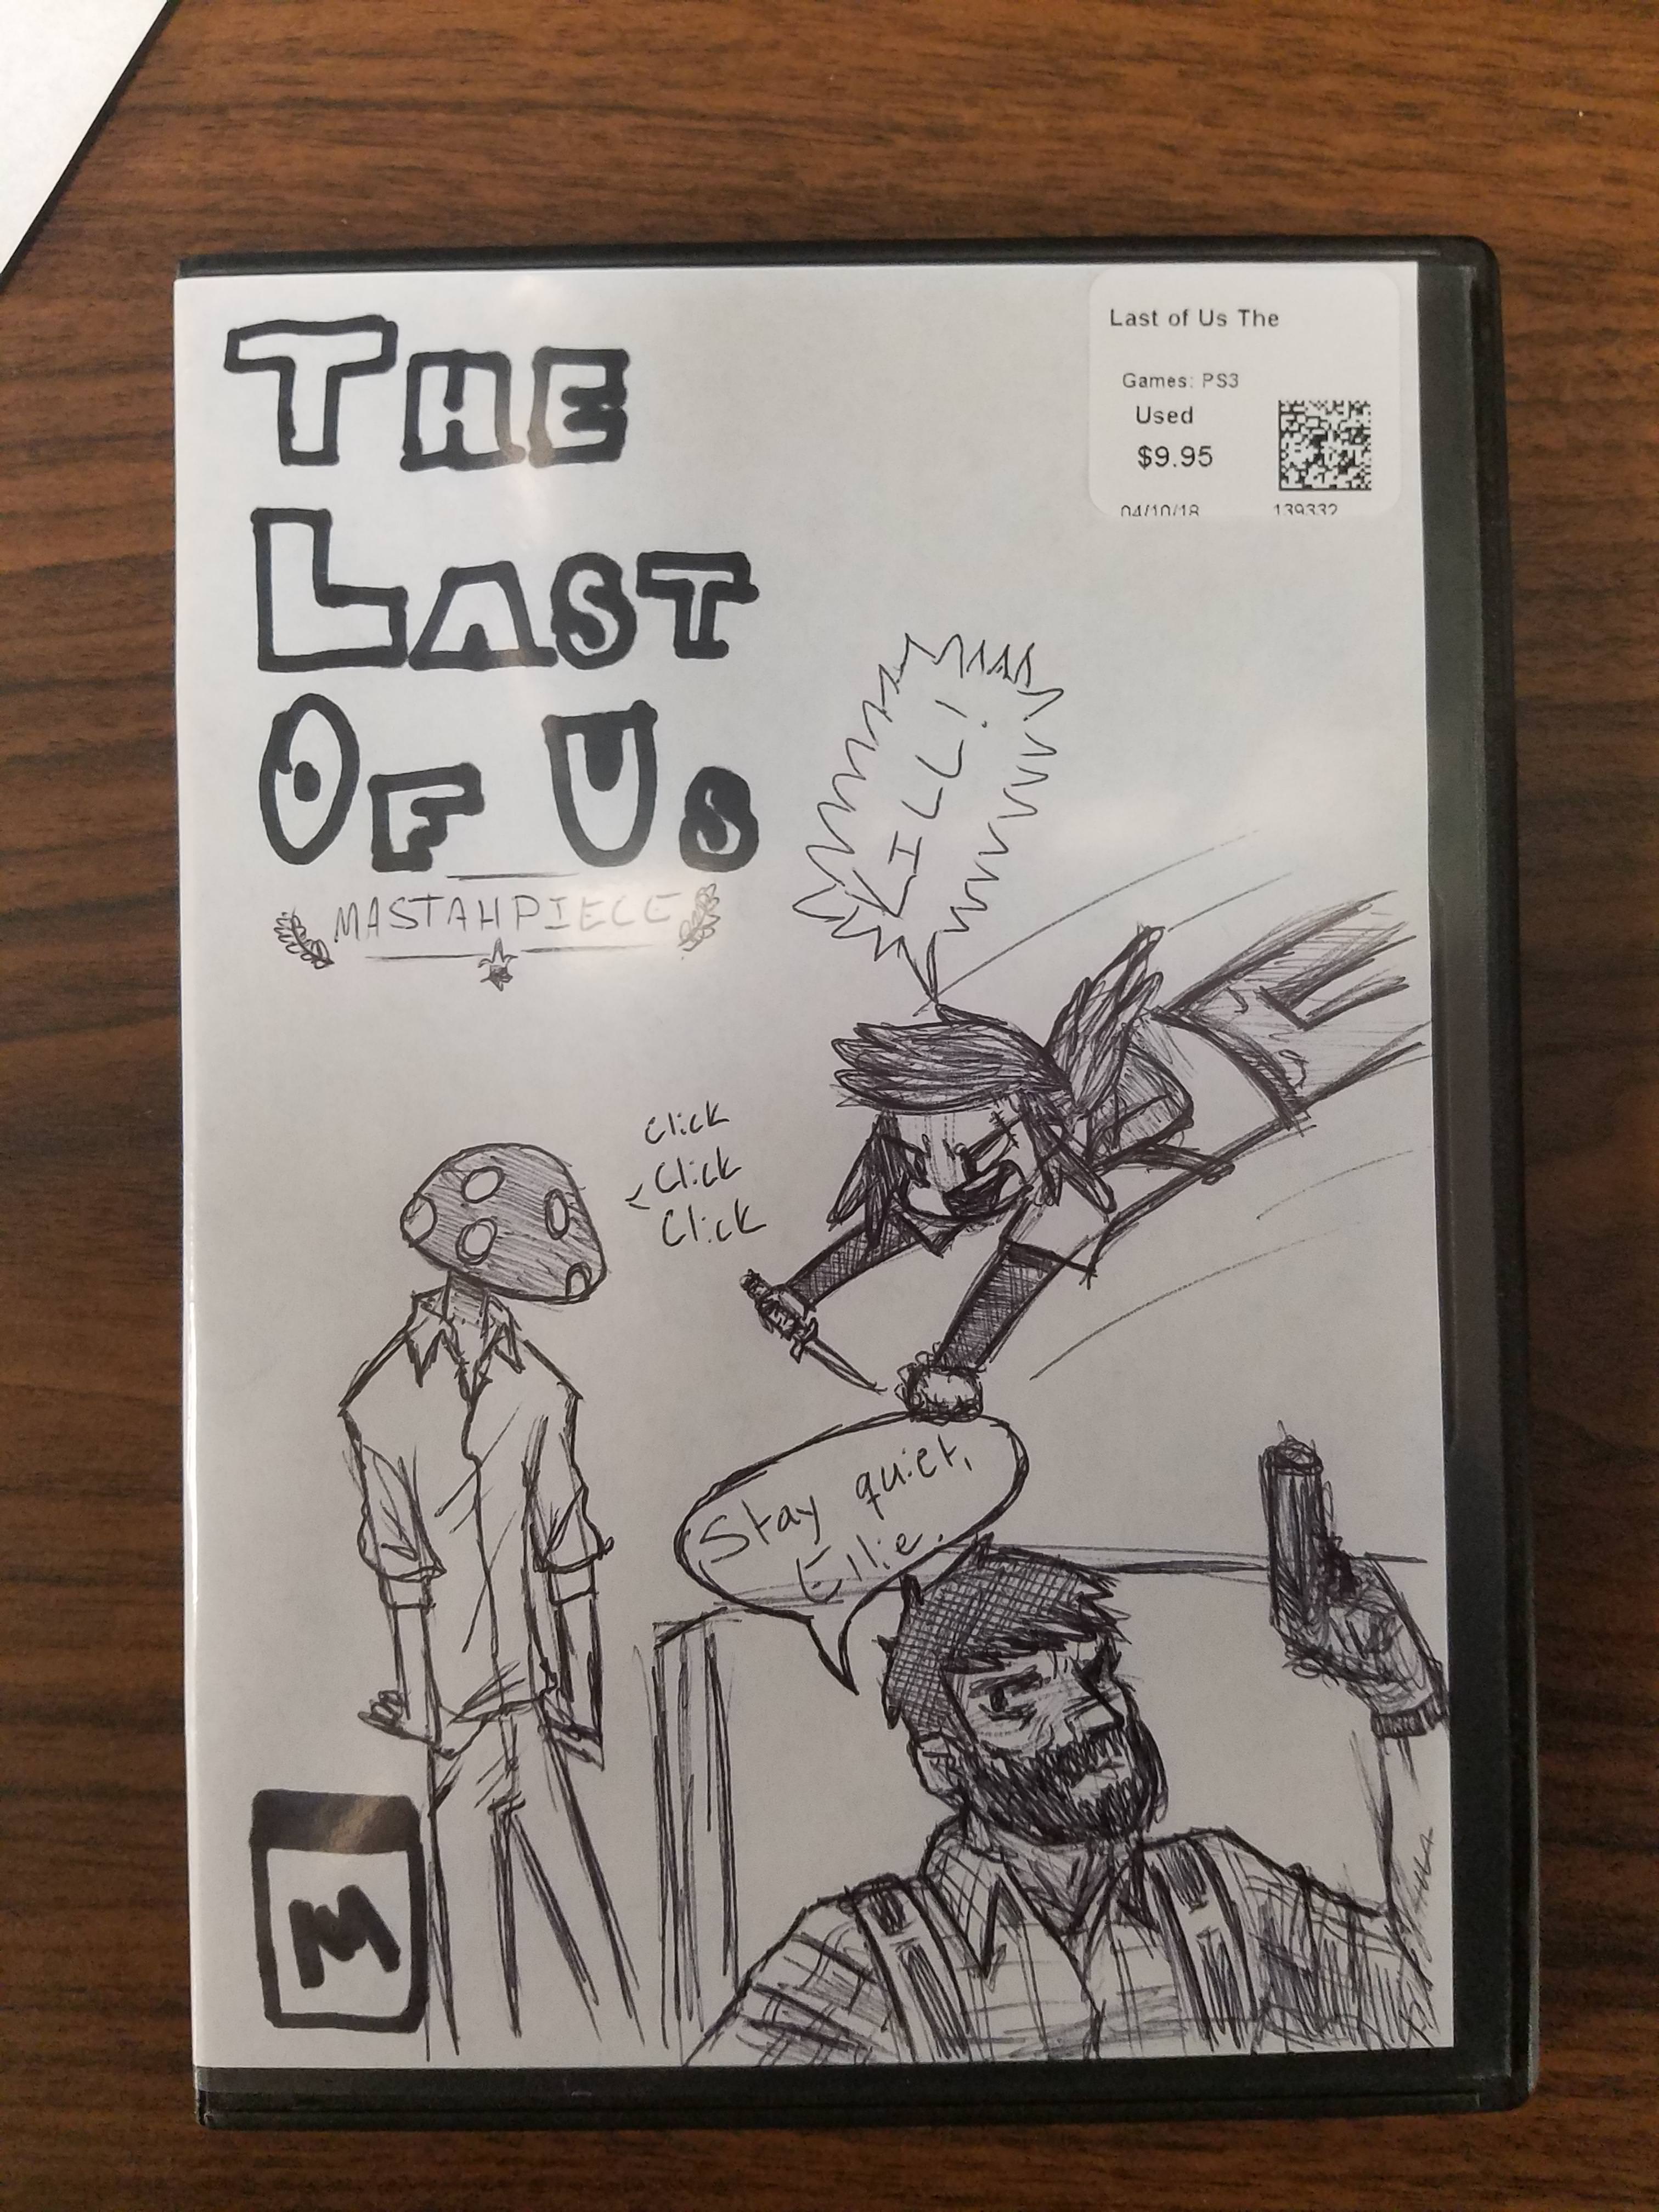 cartoon - The Last Of Us Listah Proses 3177173 Mista Al ce Oa a Stay quiet